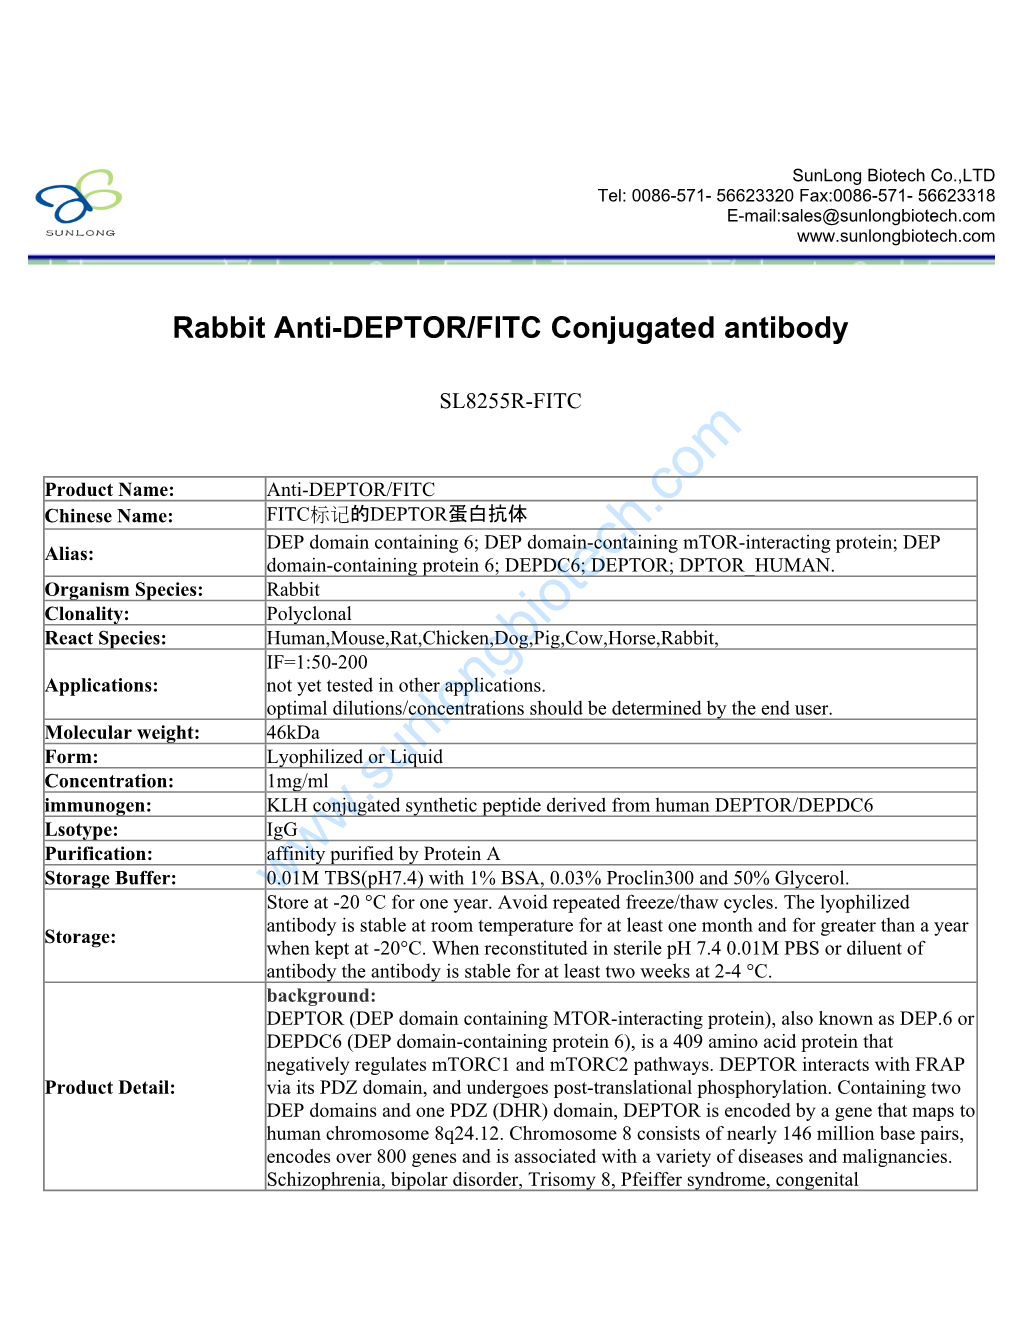 Rabbit Anti-DEPTOR/FITC Conjugated Antibody-SL8255R-FITC